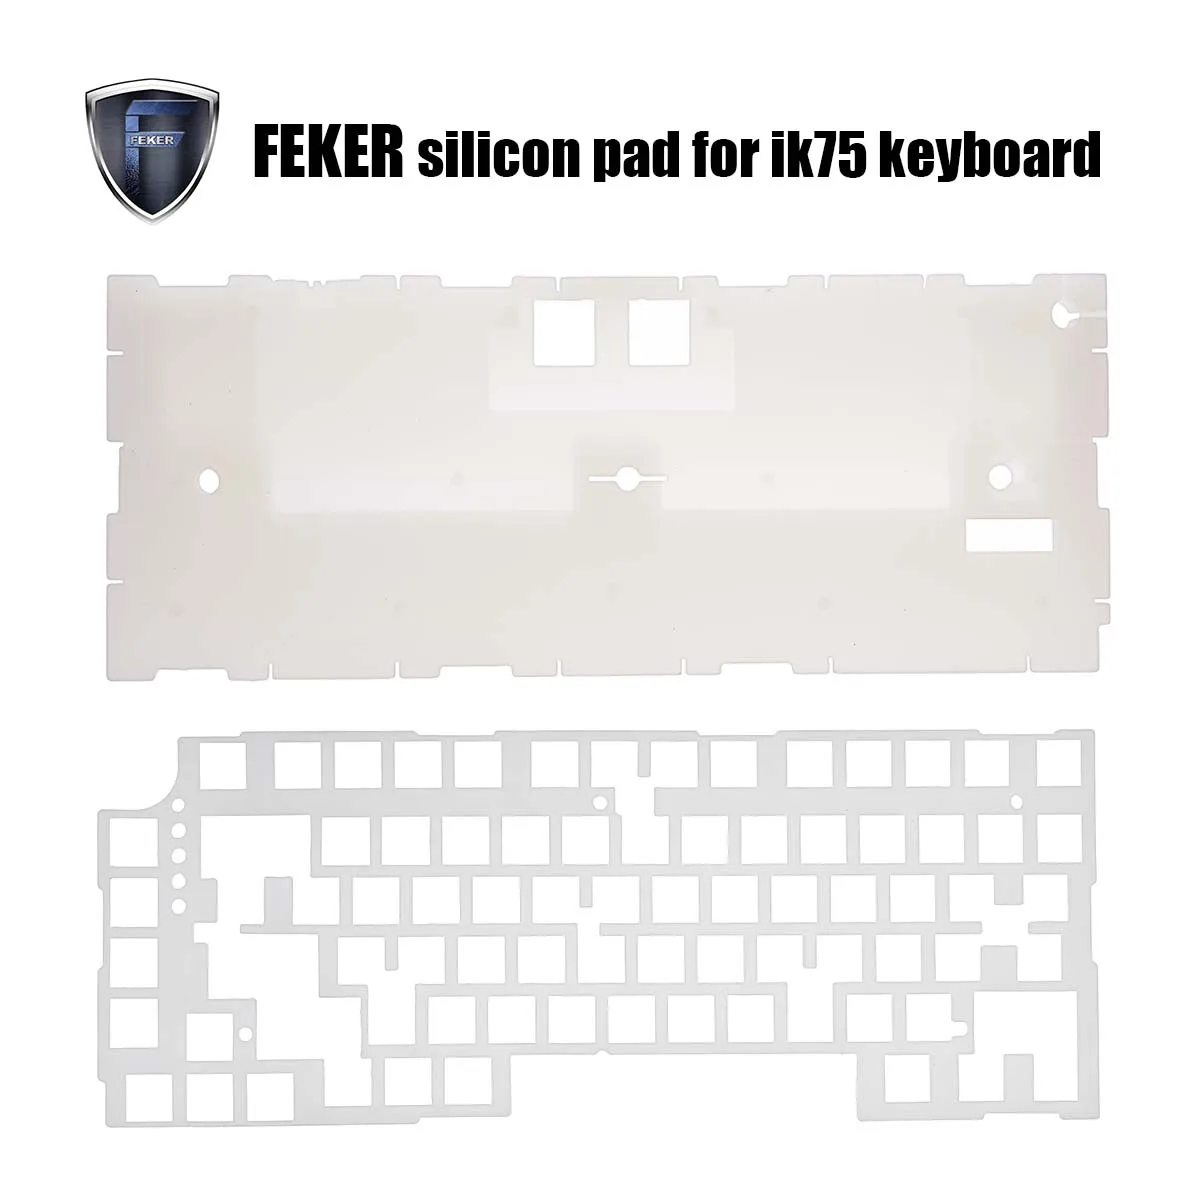 2 in 1 FEKER 75% Mechanical Keyboard Silicone Pad Gaming Keyboard DIY Kit for FEKER IK75 Keyboard Exclusive Silicone Pad